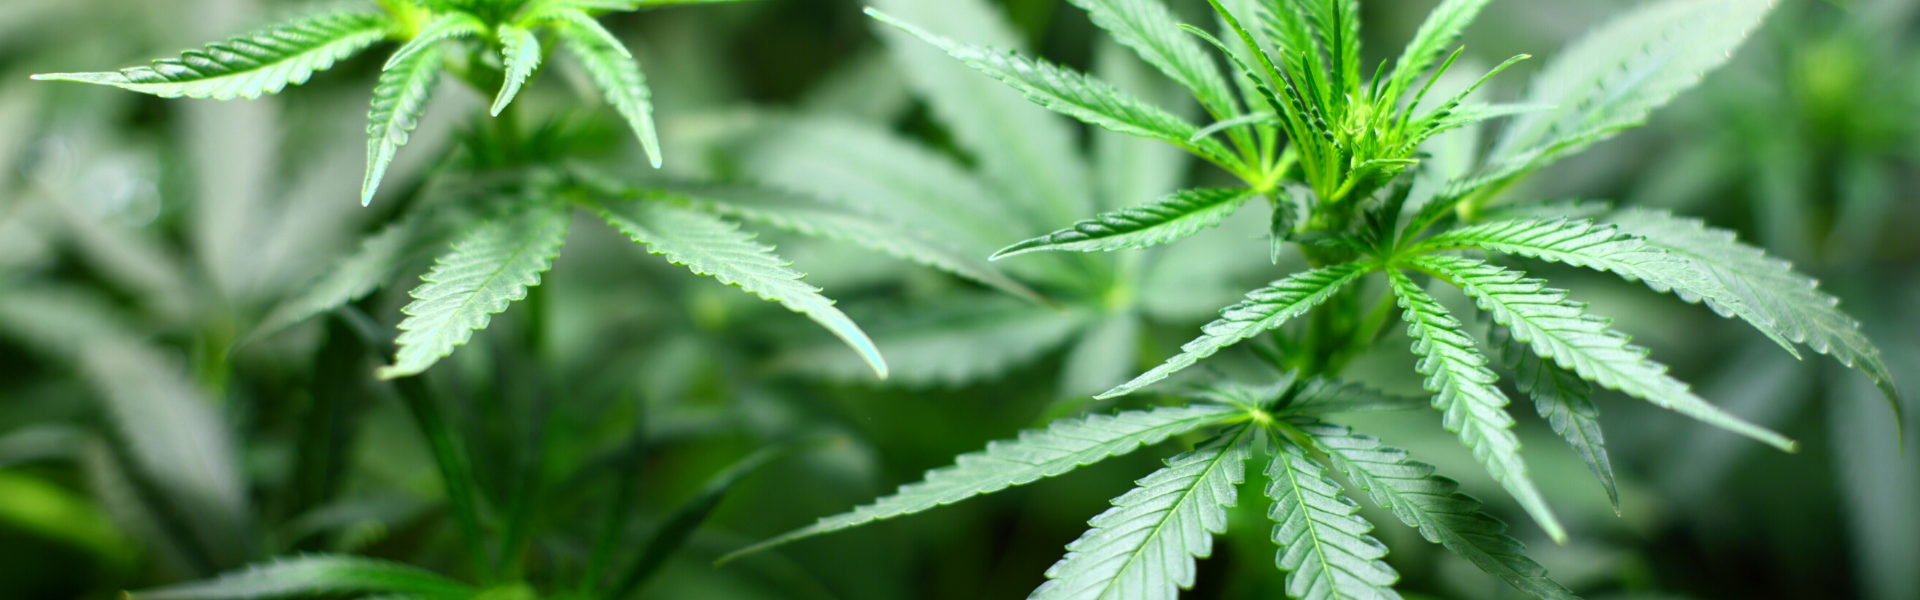 Utah moves to ban synthetic cannabinoids in medical marijuana products